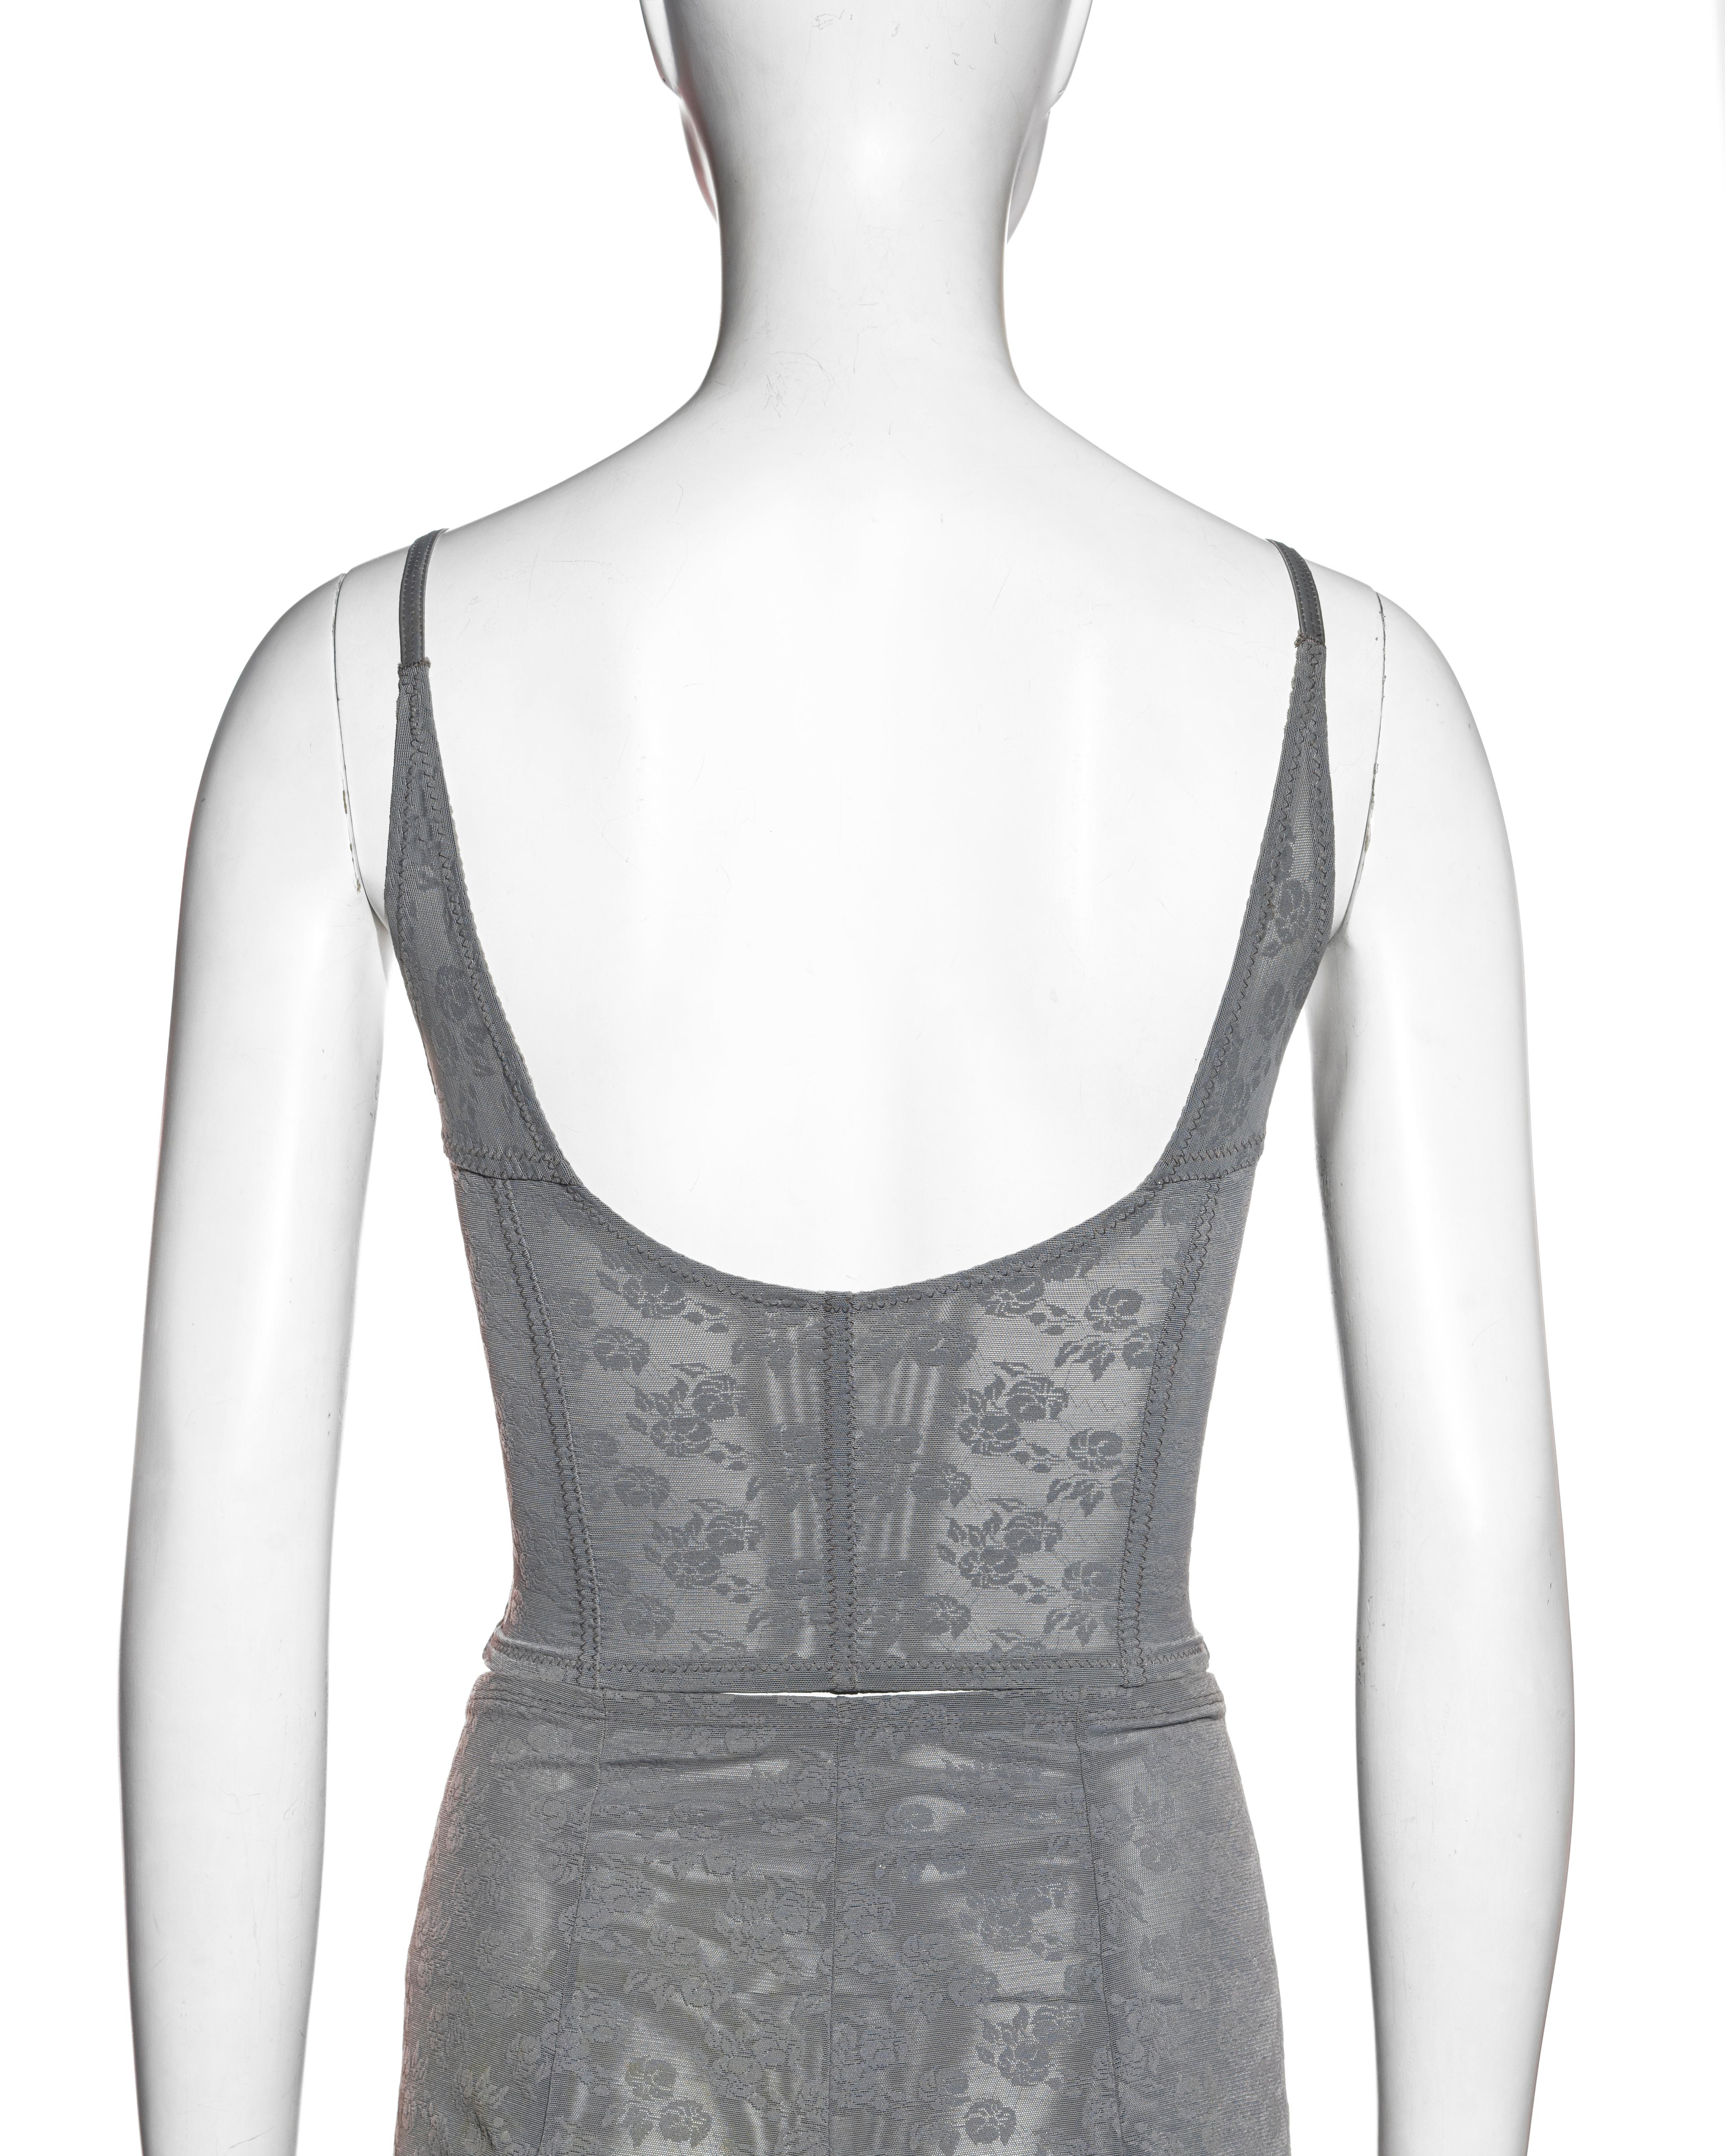 Dolce & Gabbana grey floral jacquard mesh corset and pants set, c. 1996-1998 2